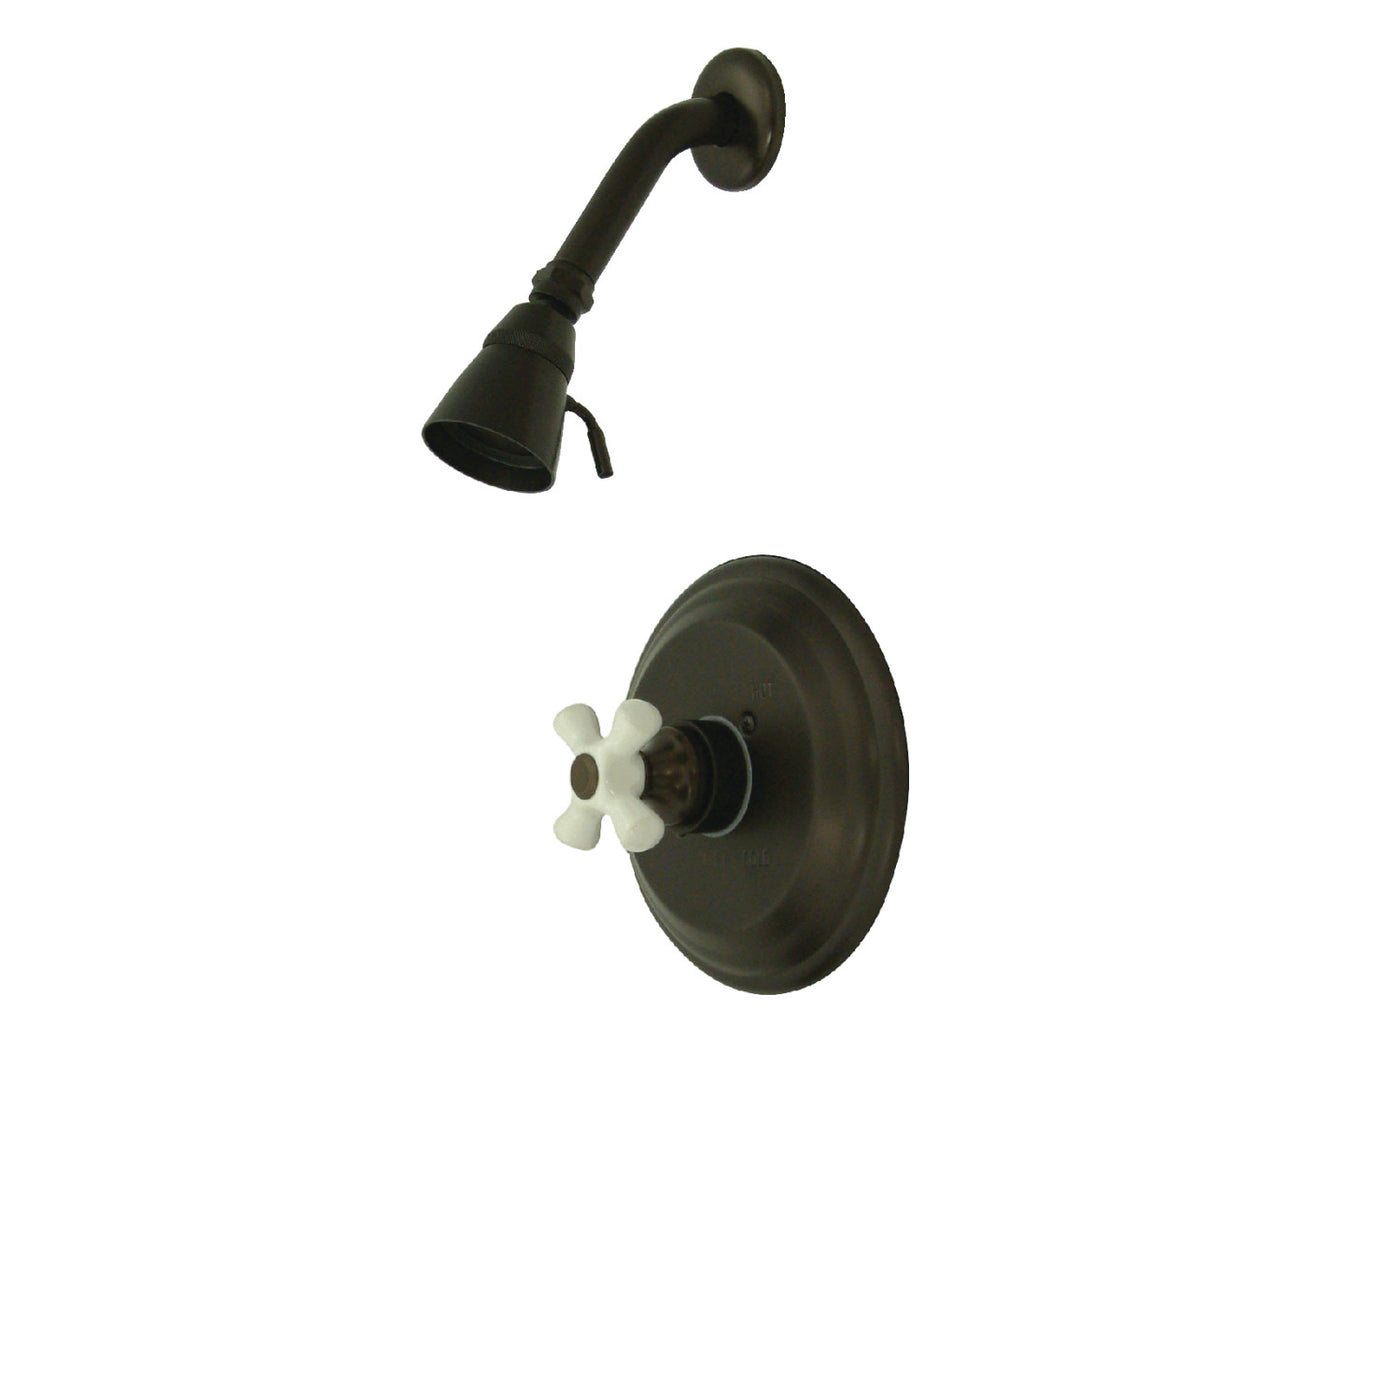 Elements of Design EB3635PXSO Pressure Balanced Shower Faucet, Oil Rubbed Bronze